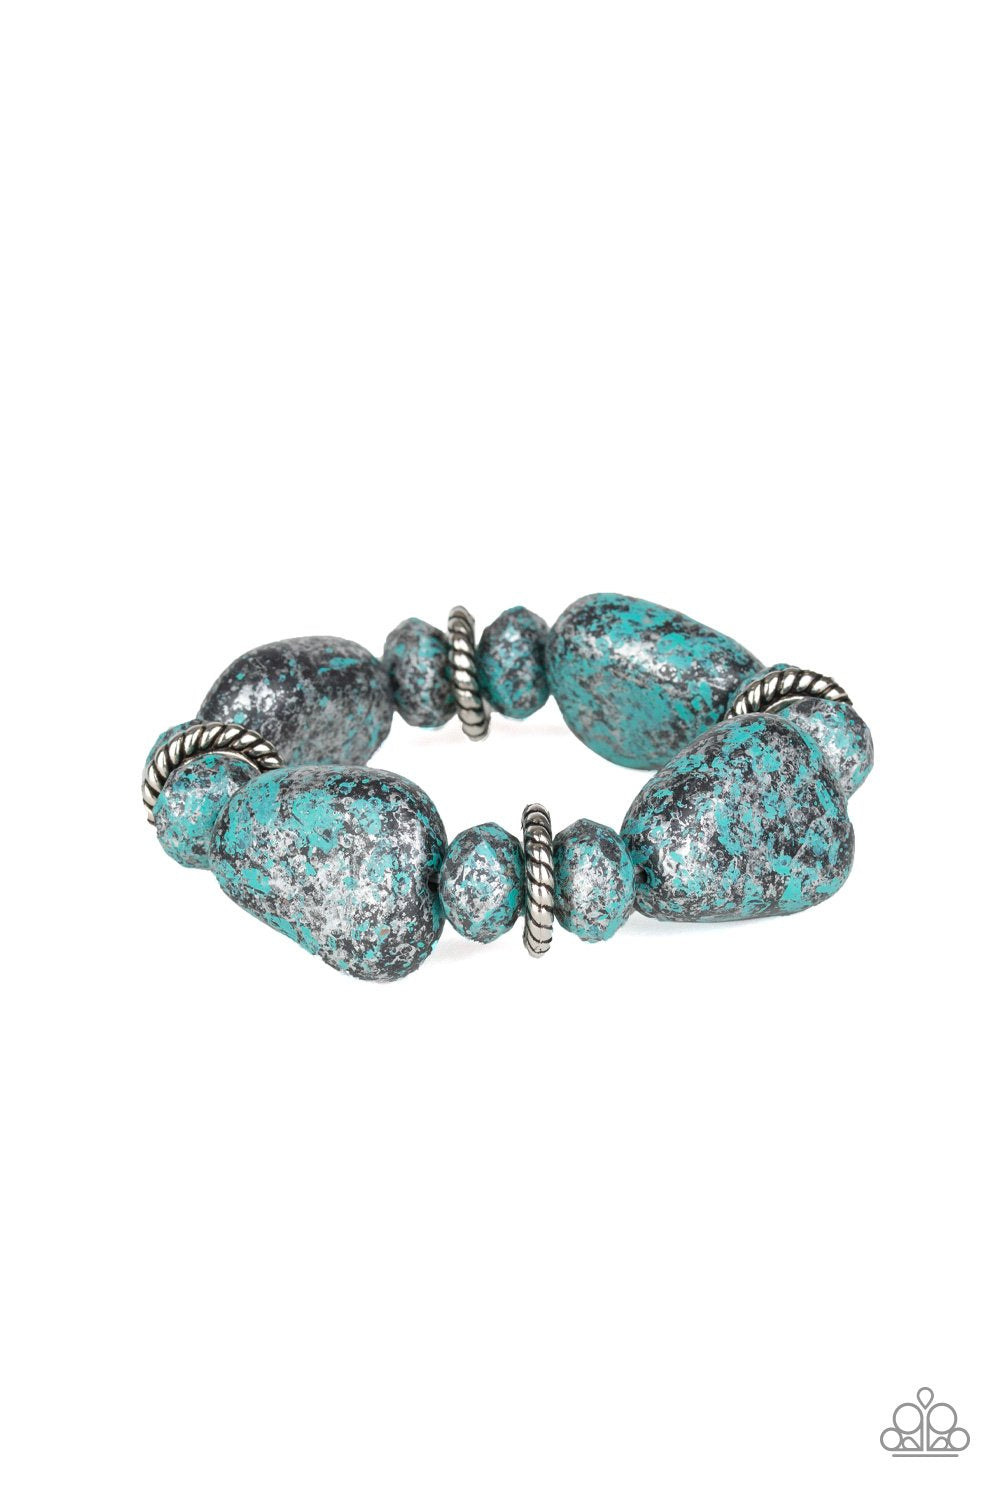 Stone Age Envy - Blue Bracelet